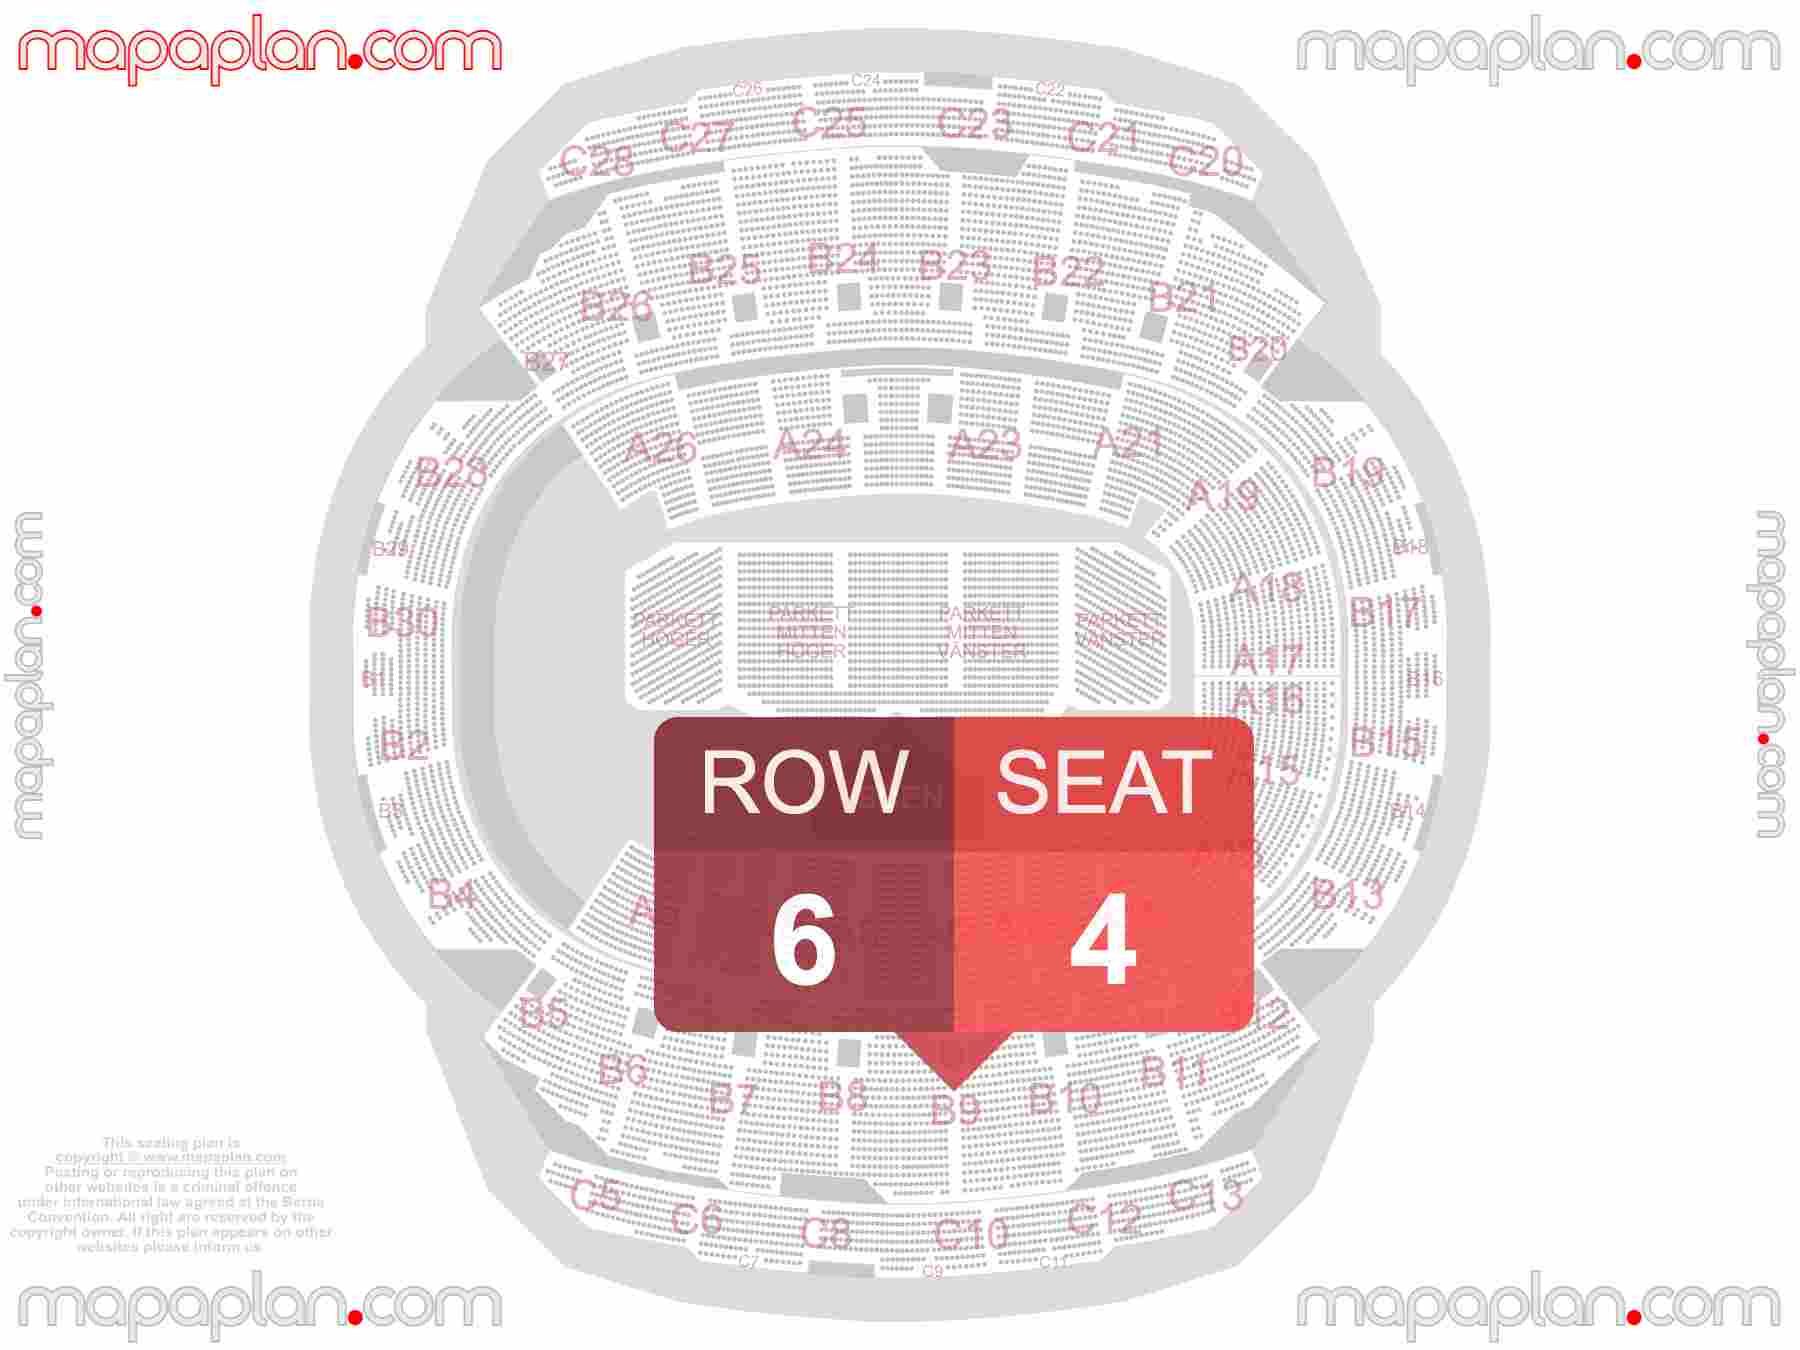 Stockholm Avicii Globe Arena seating plan Concert sittplan med sektioner sittplatser platsnummer karta detailed seat numbers and row numbering plan with interactive map map layout